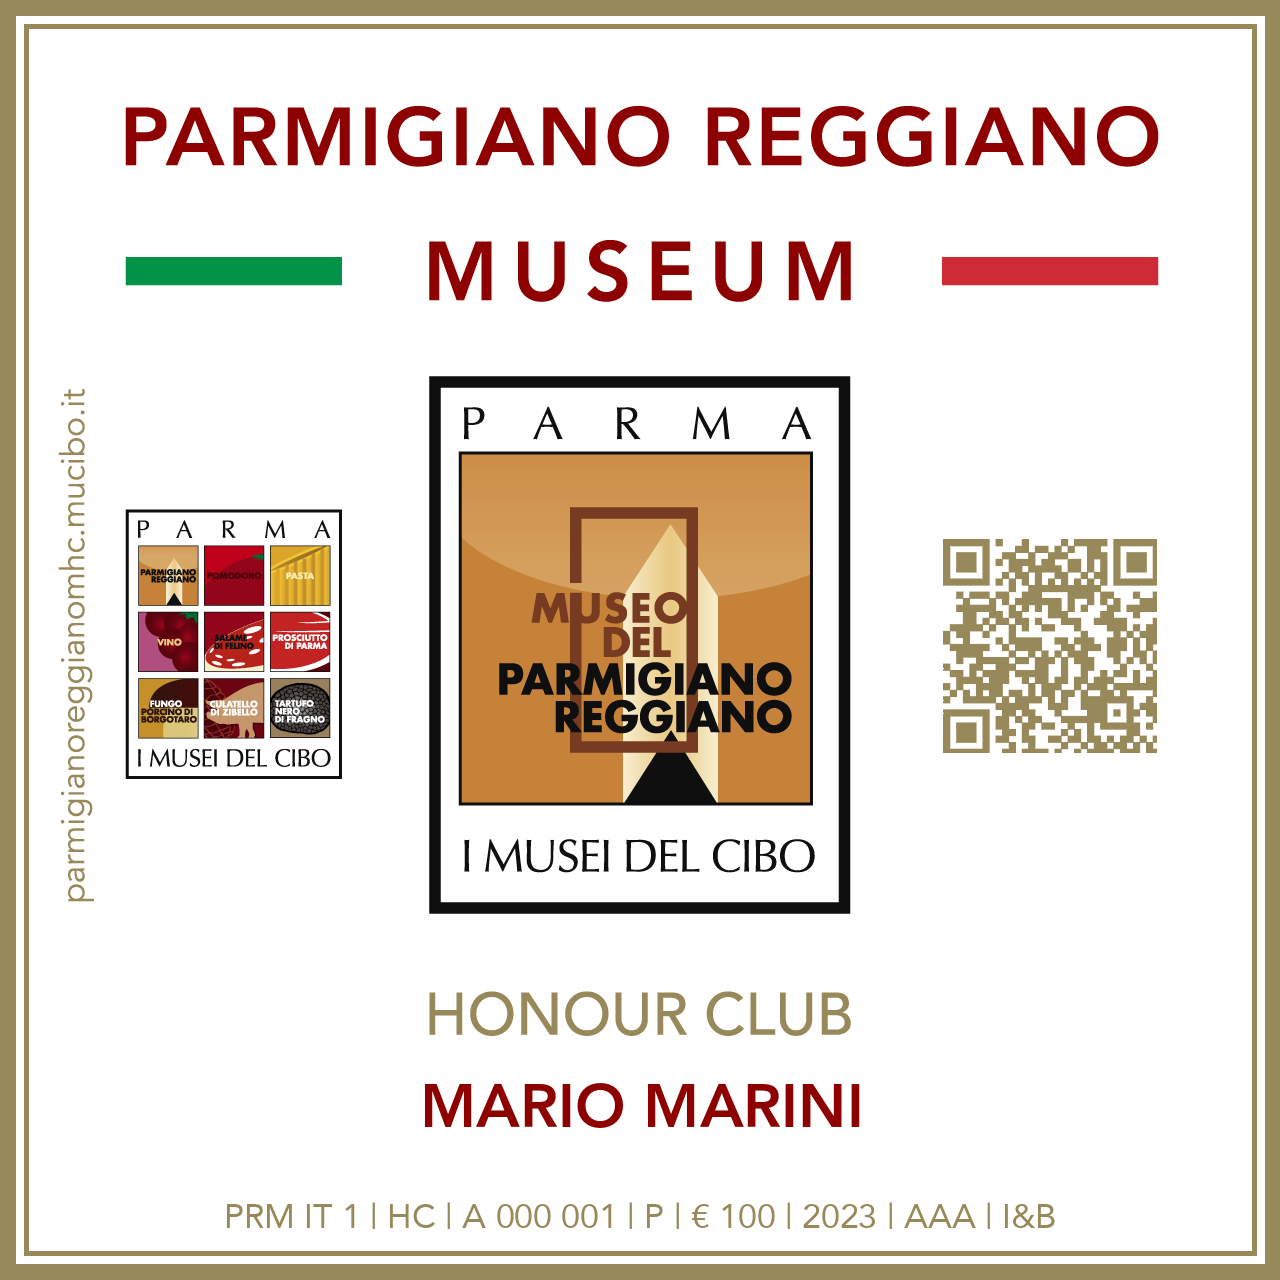 Parmigiano Reggiano Museum Honour Club - Token Id A 000 001 - MARIO MARINI